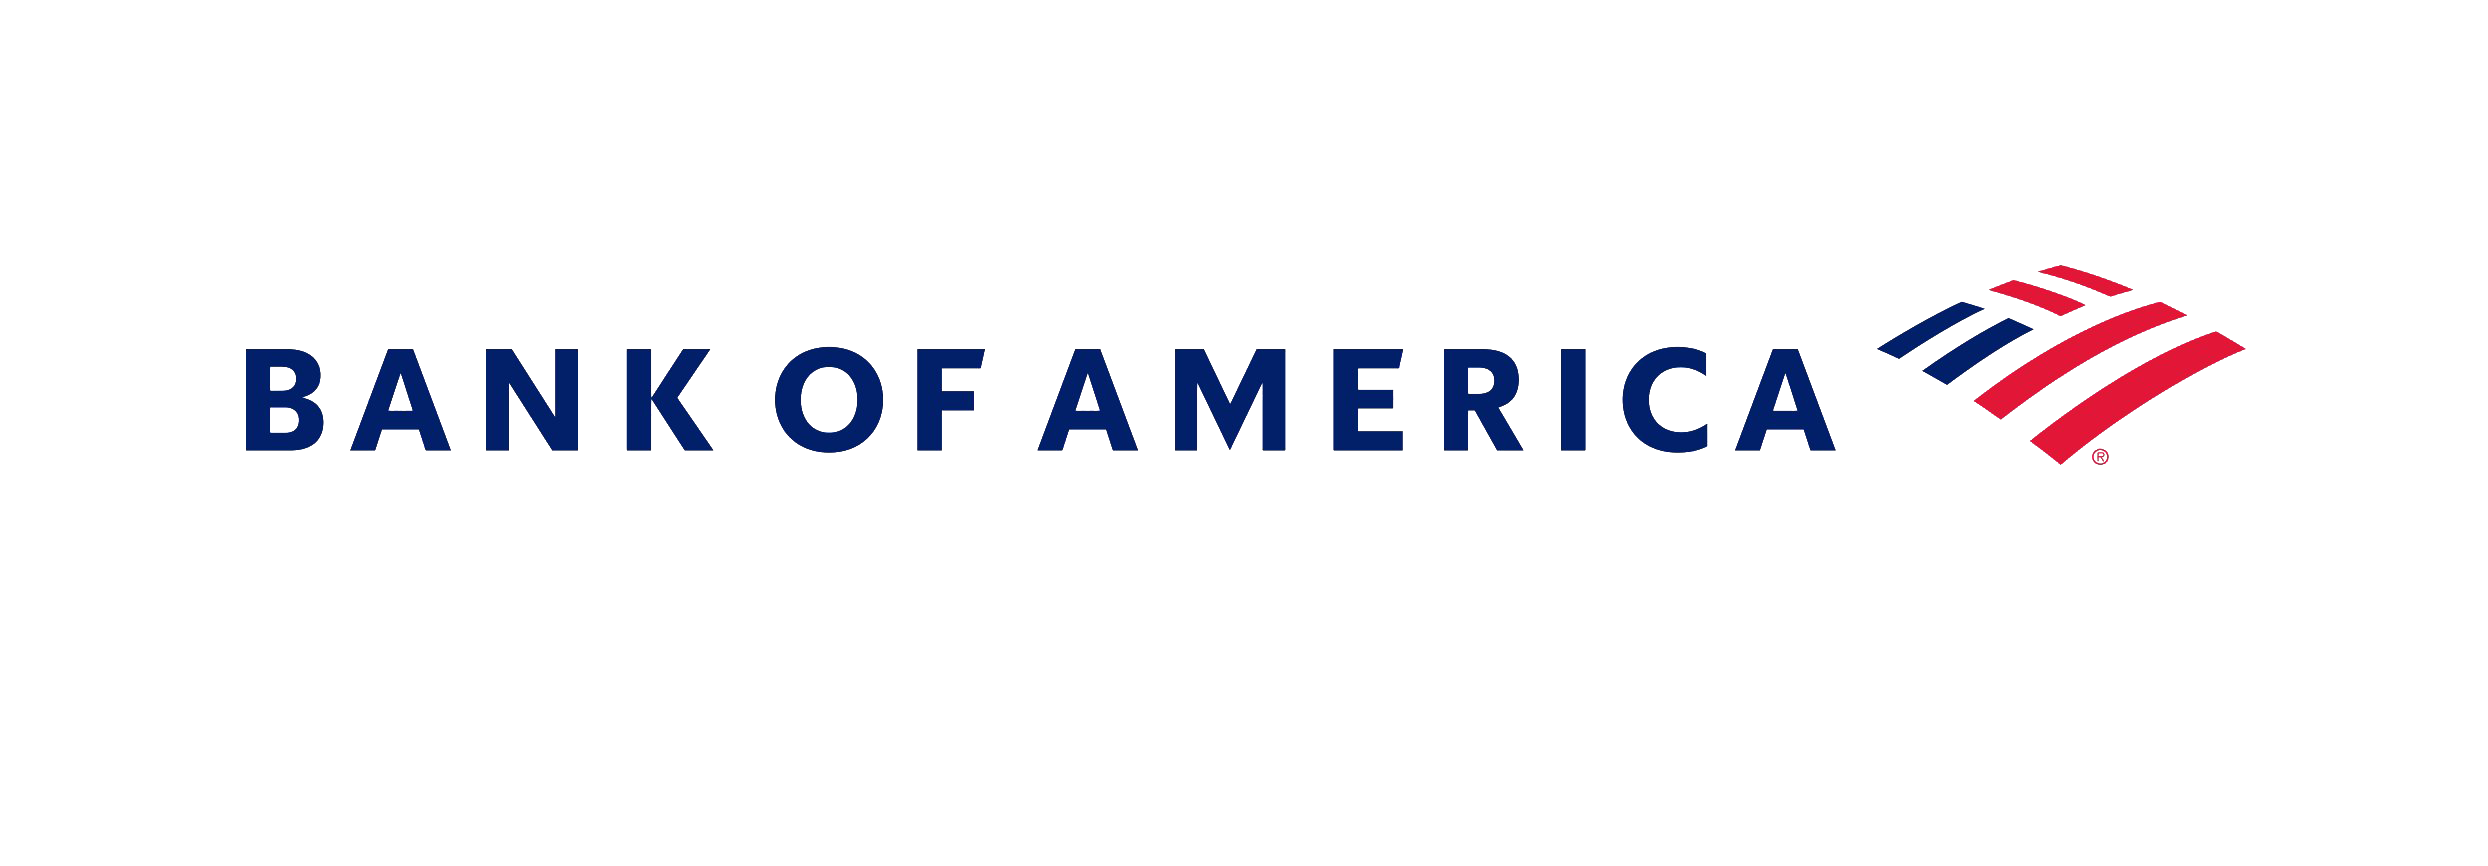 Bank Of America Logo PNG - 178759